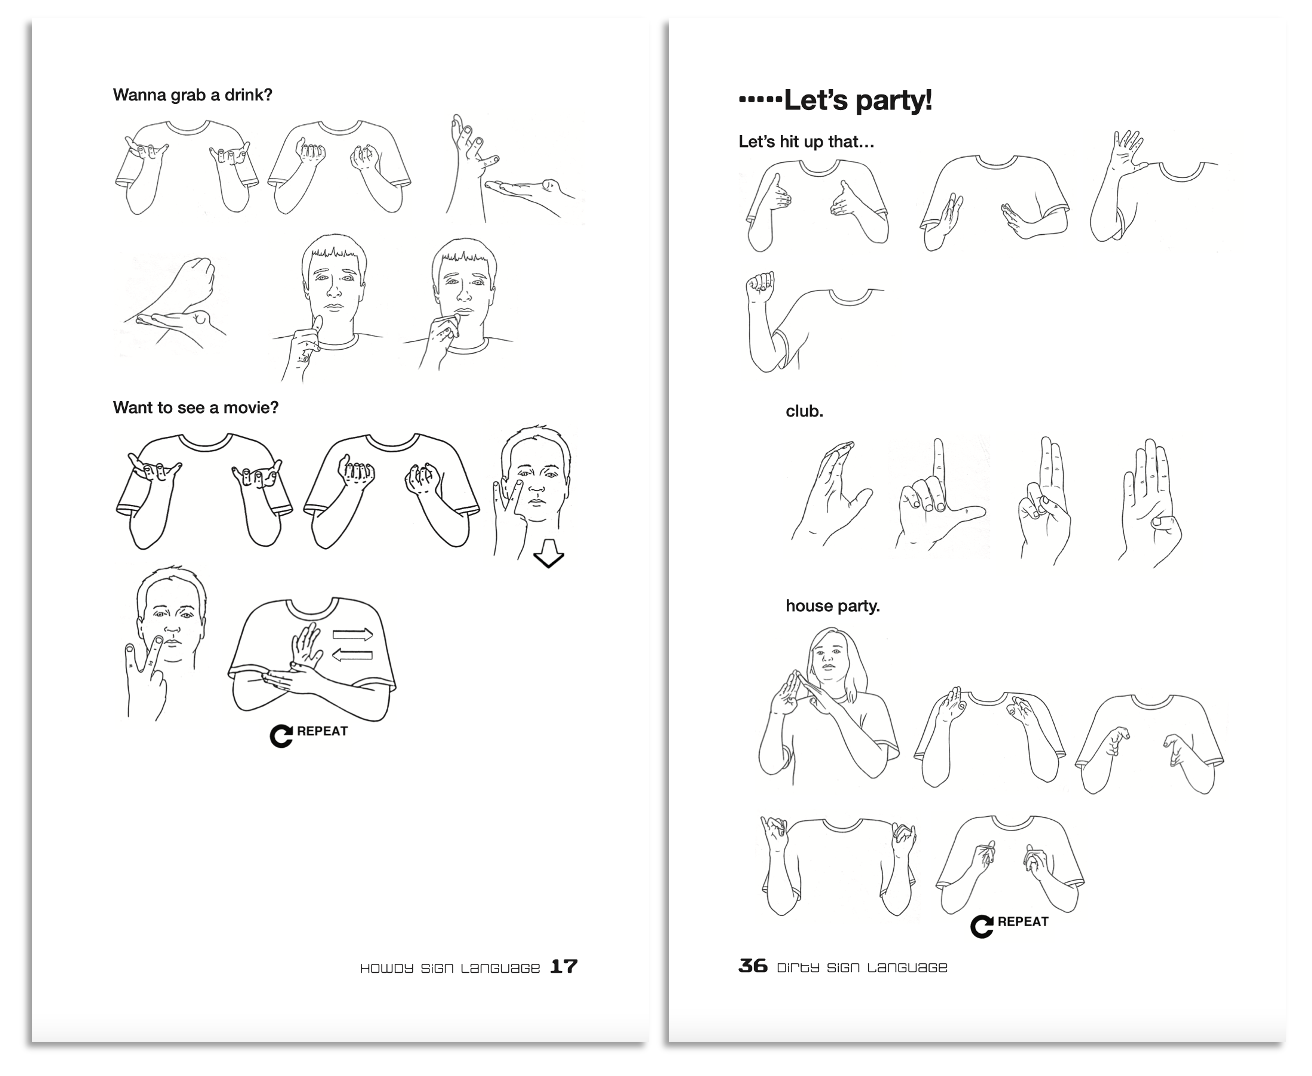 Dirty Sign Language Sample